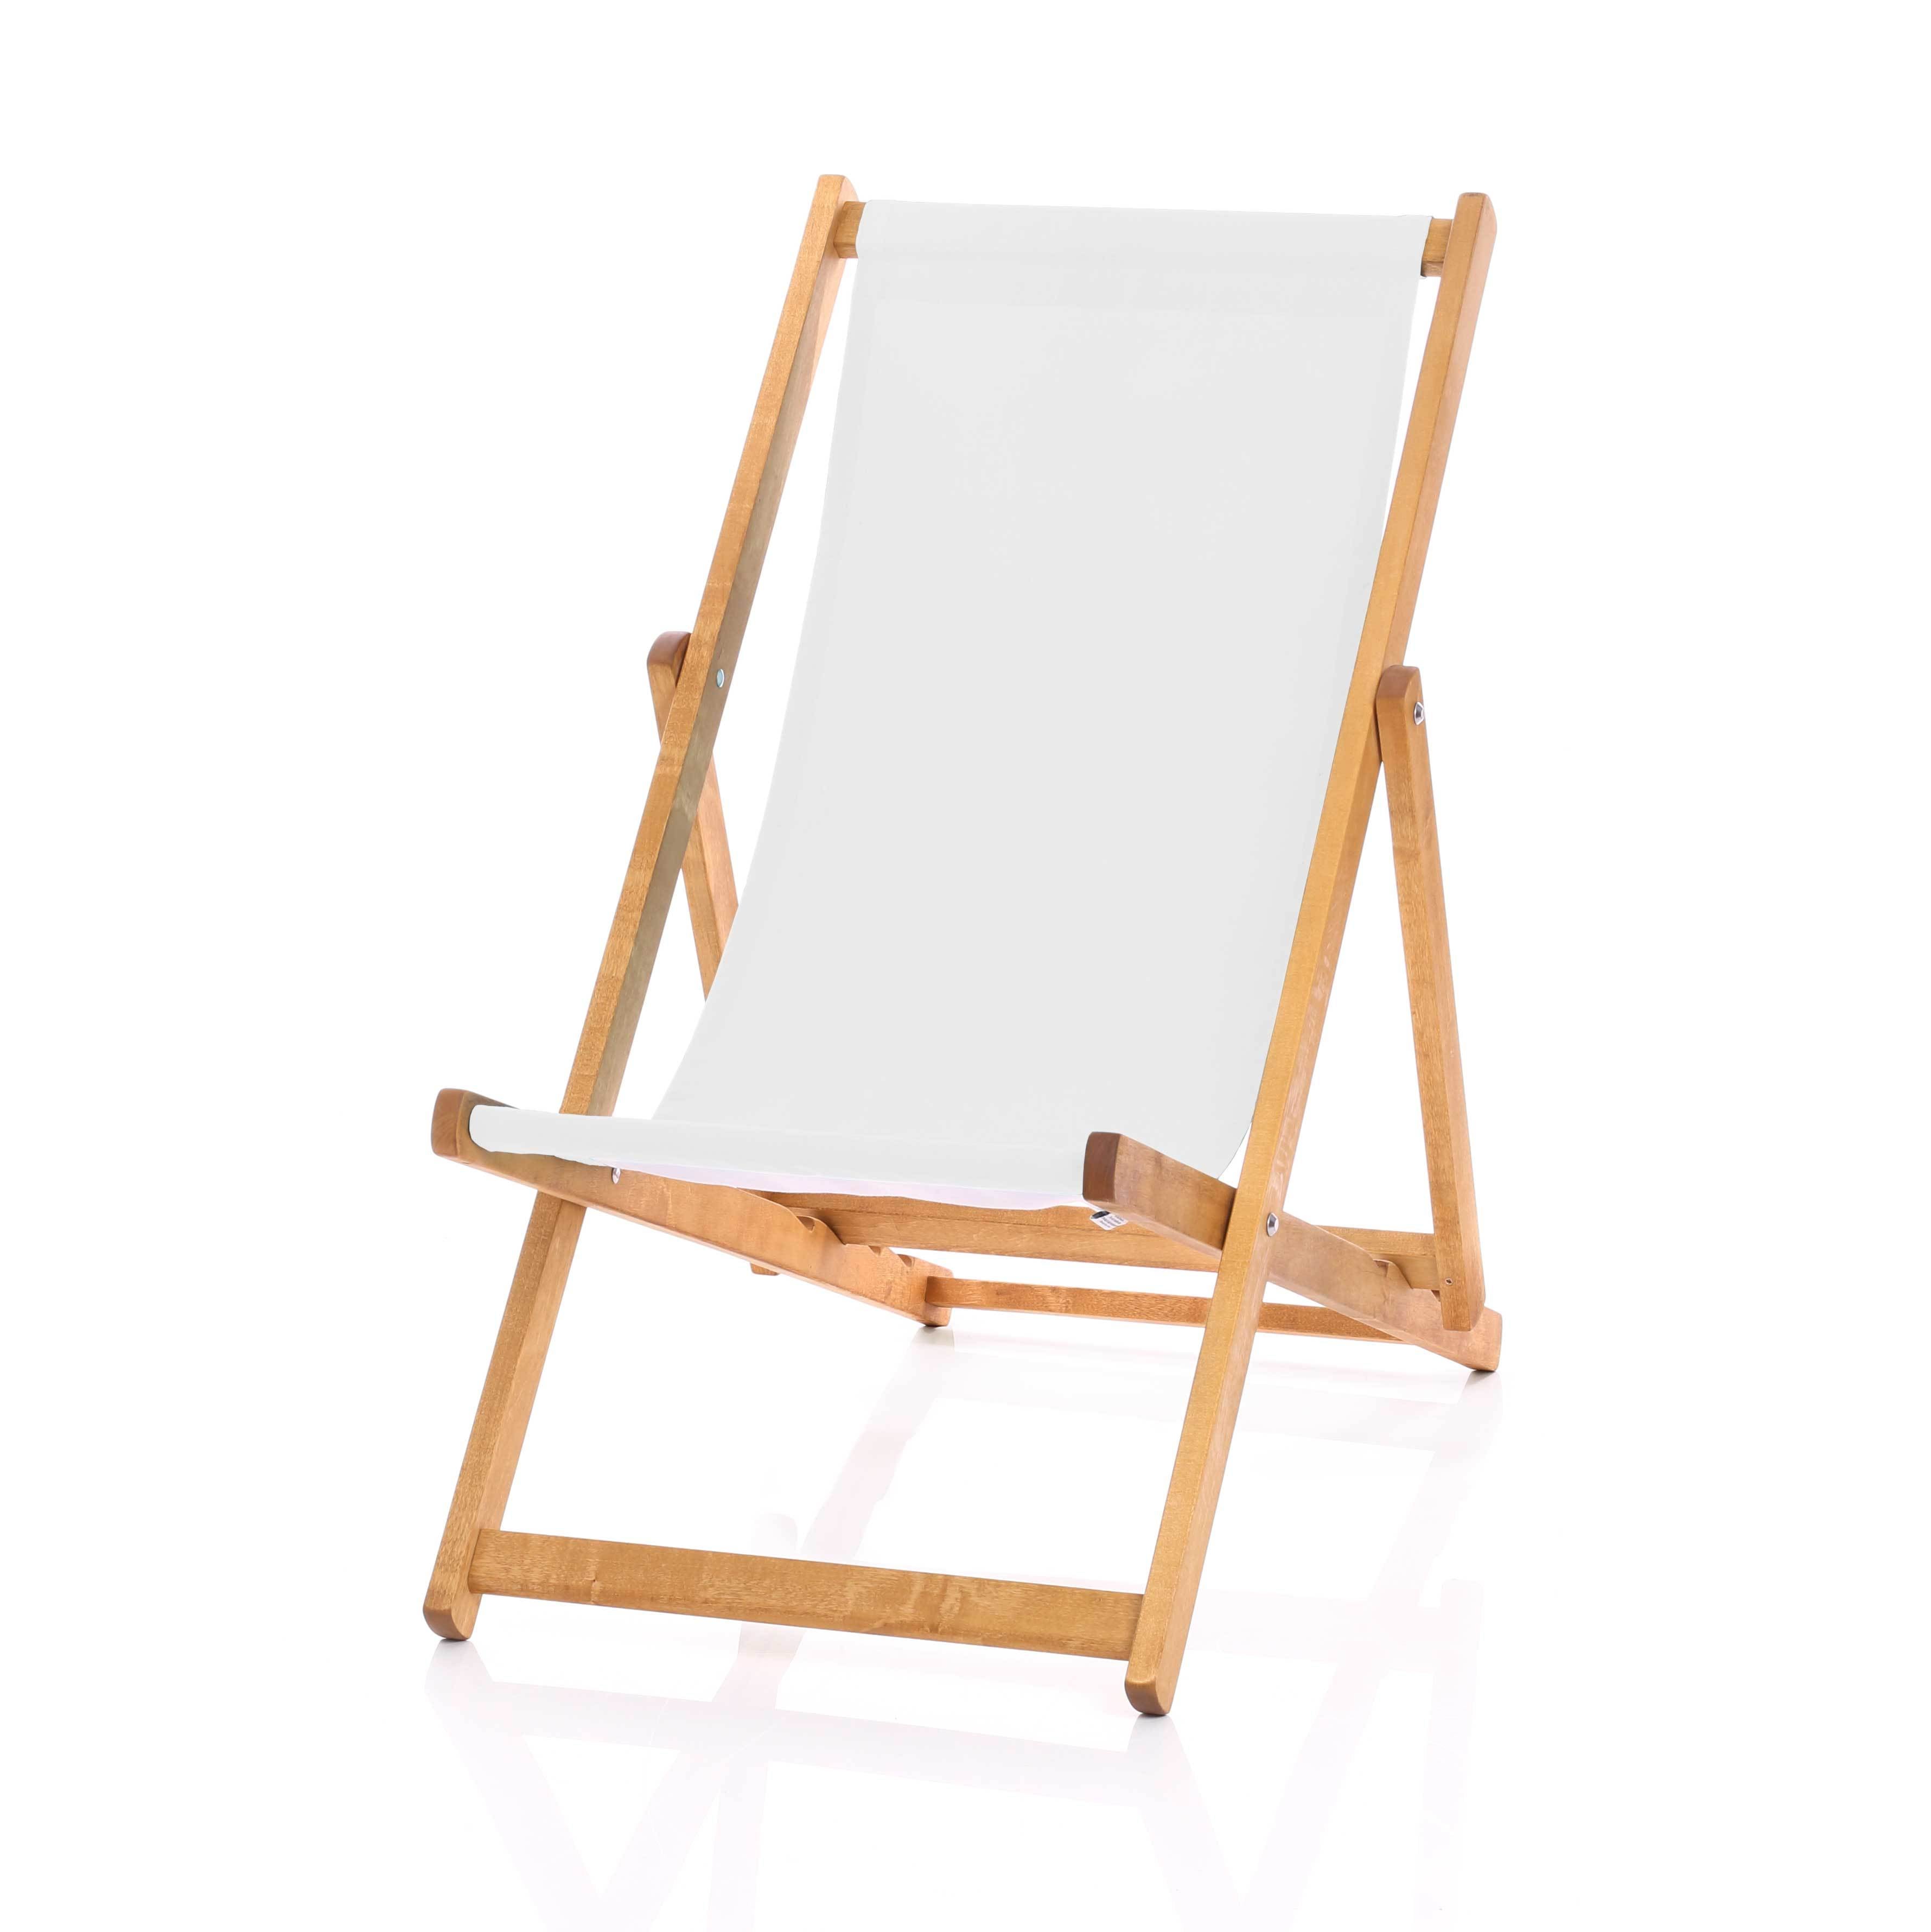 Hardwood Deckchair - Plain White